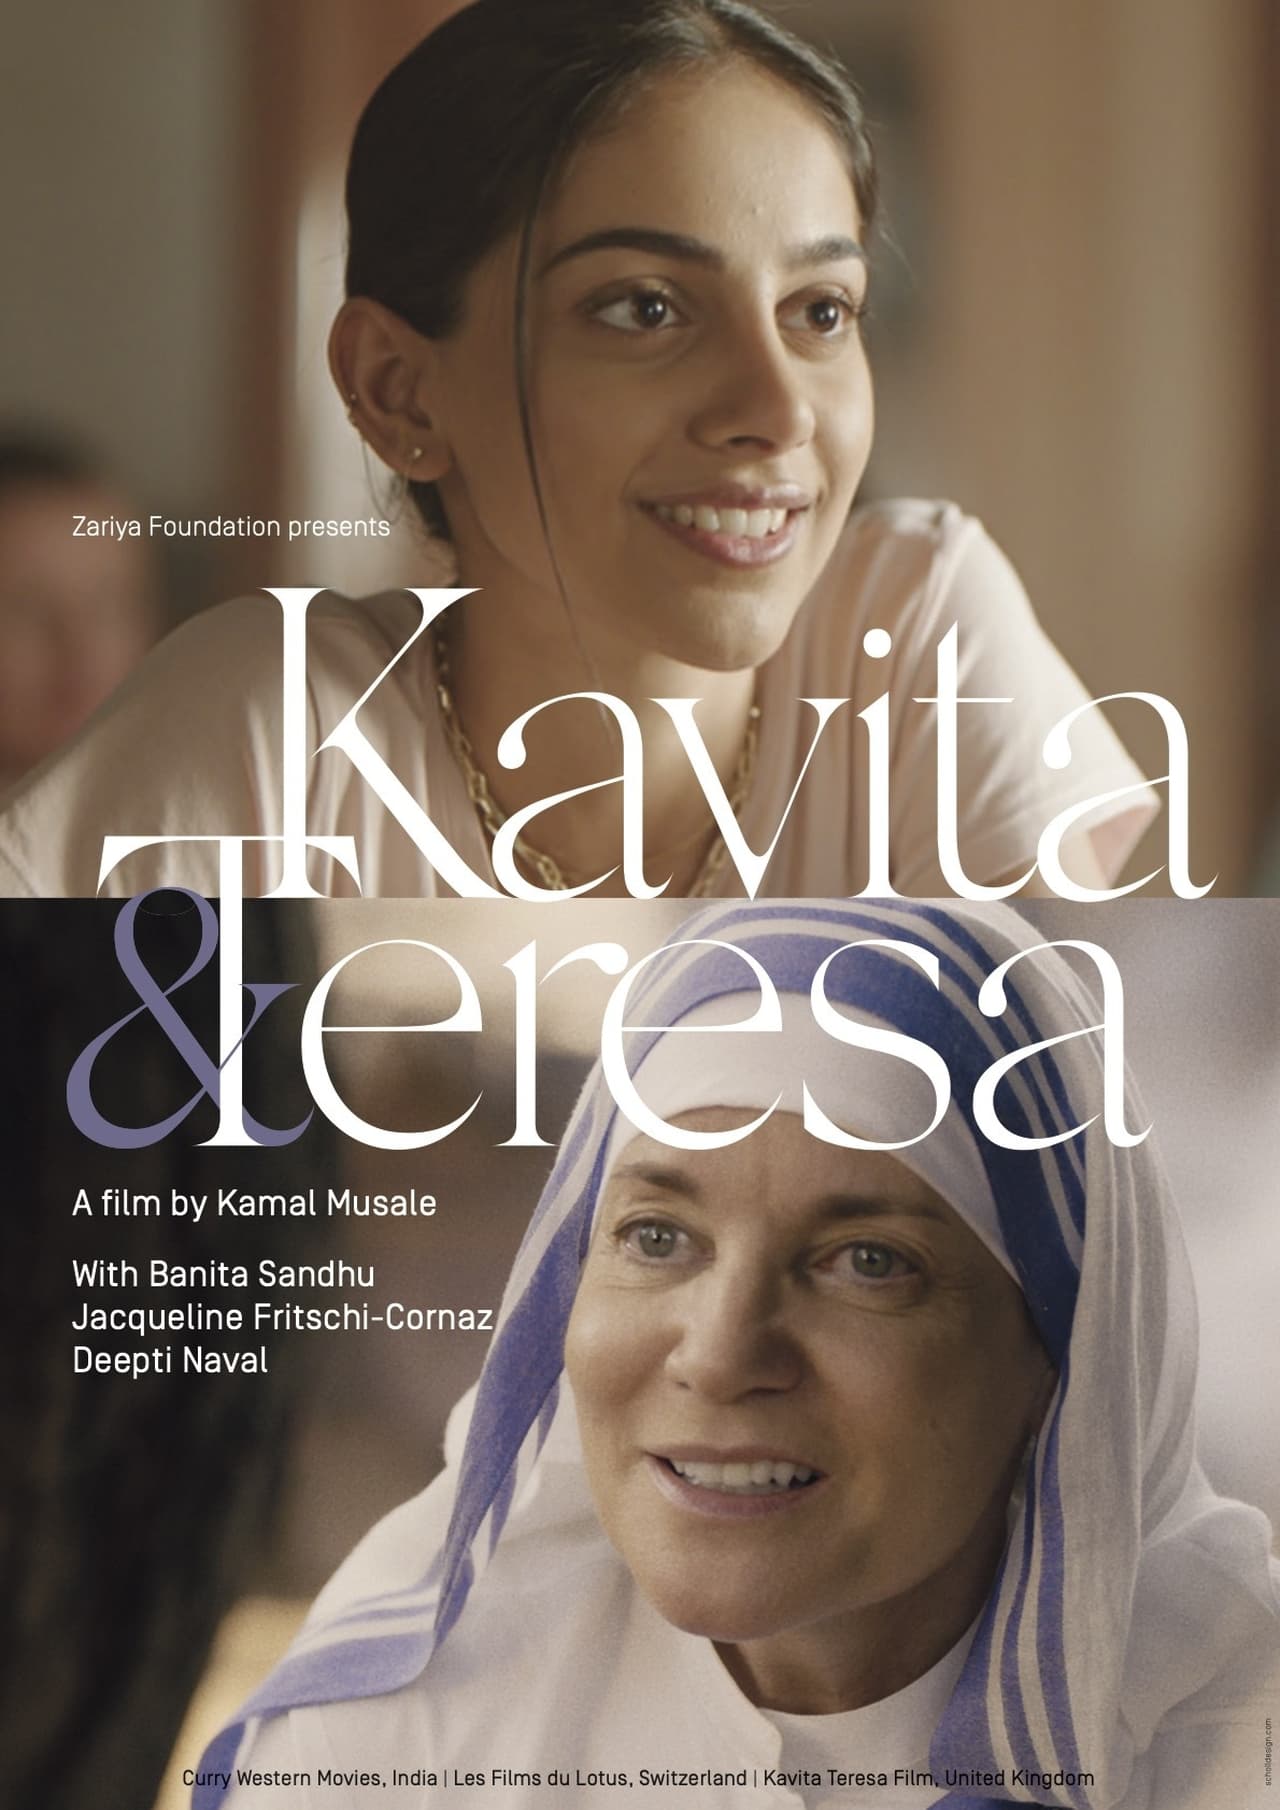 Kavita & Teresa